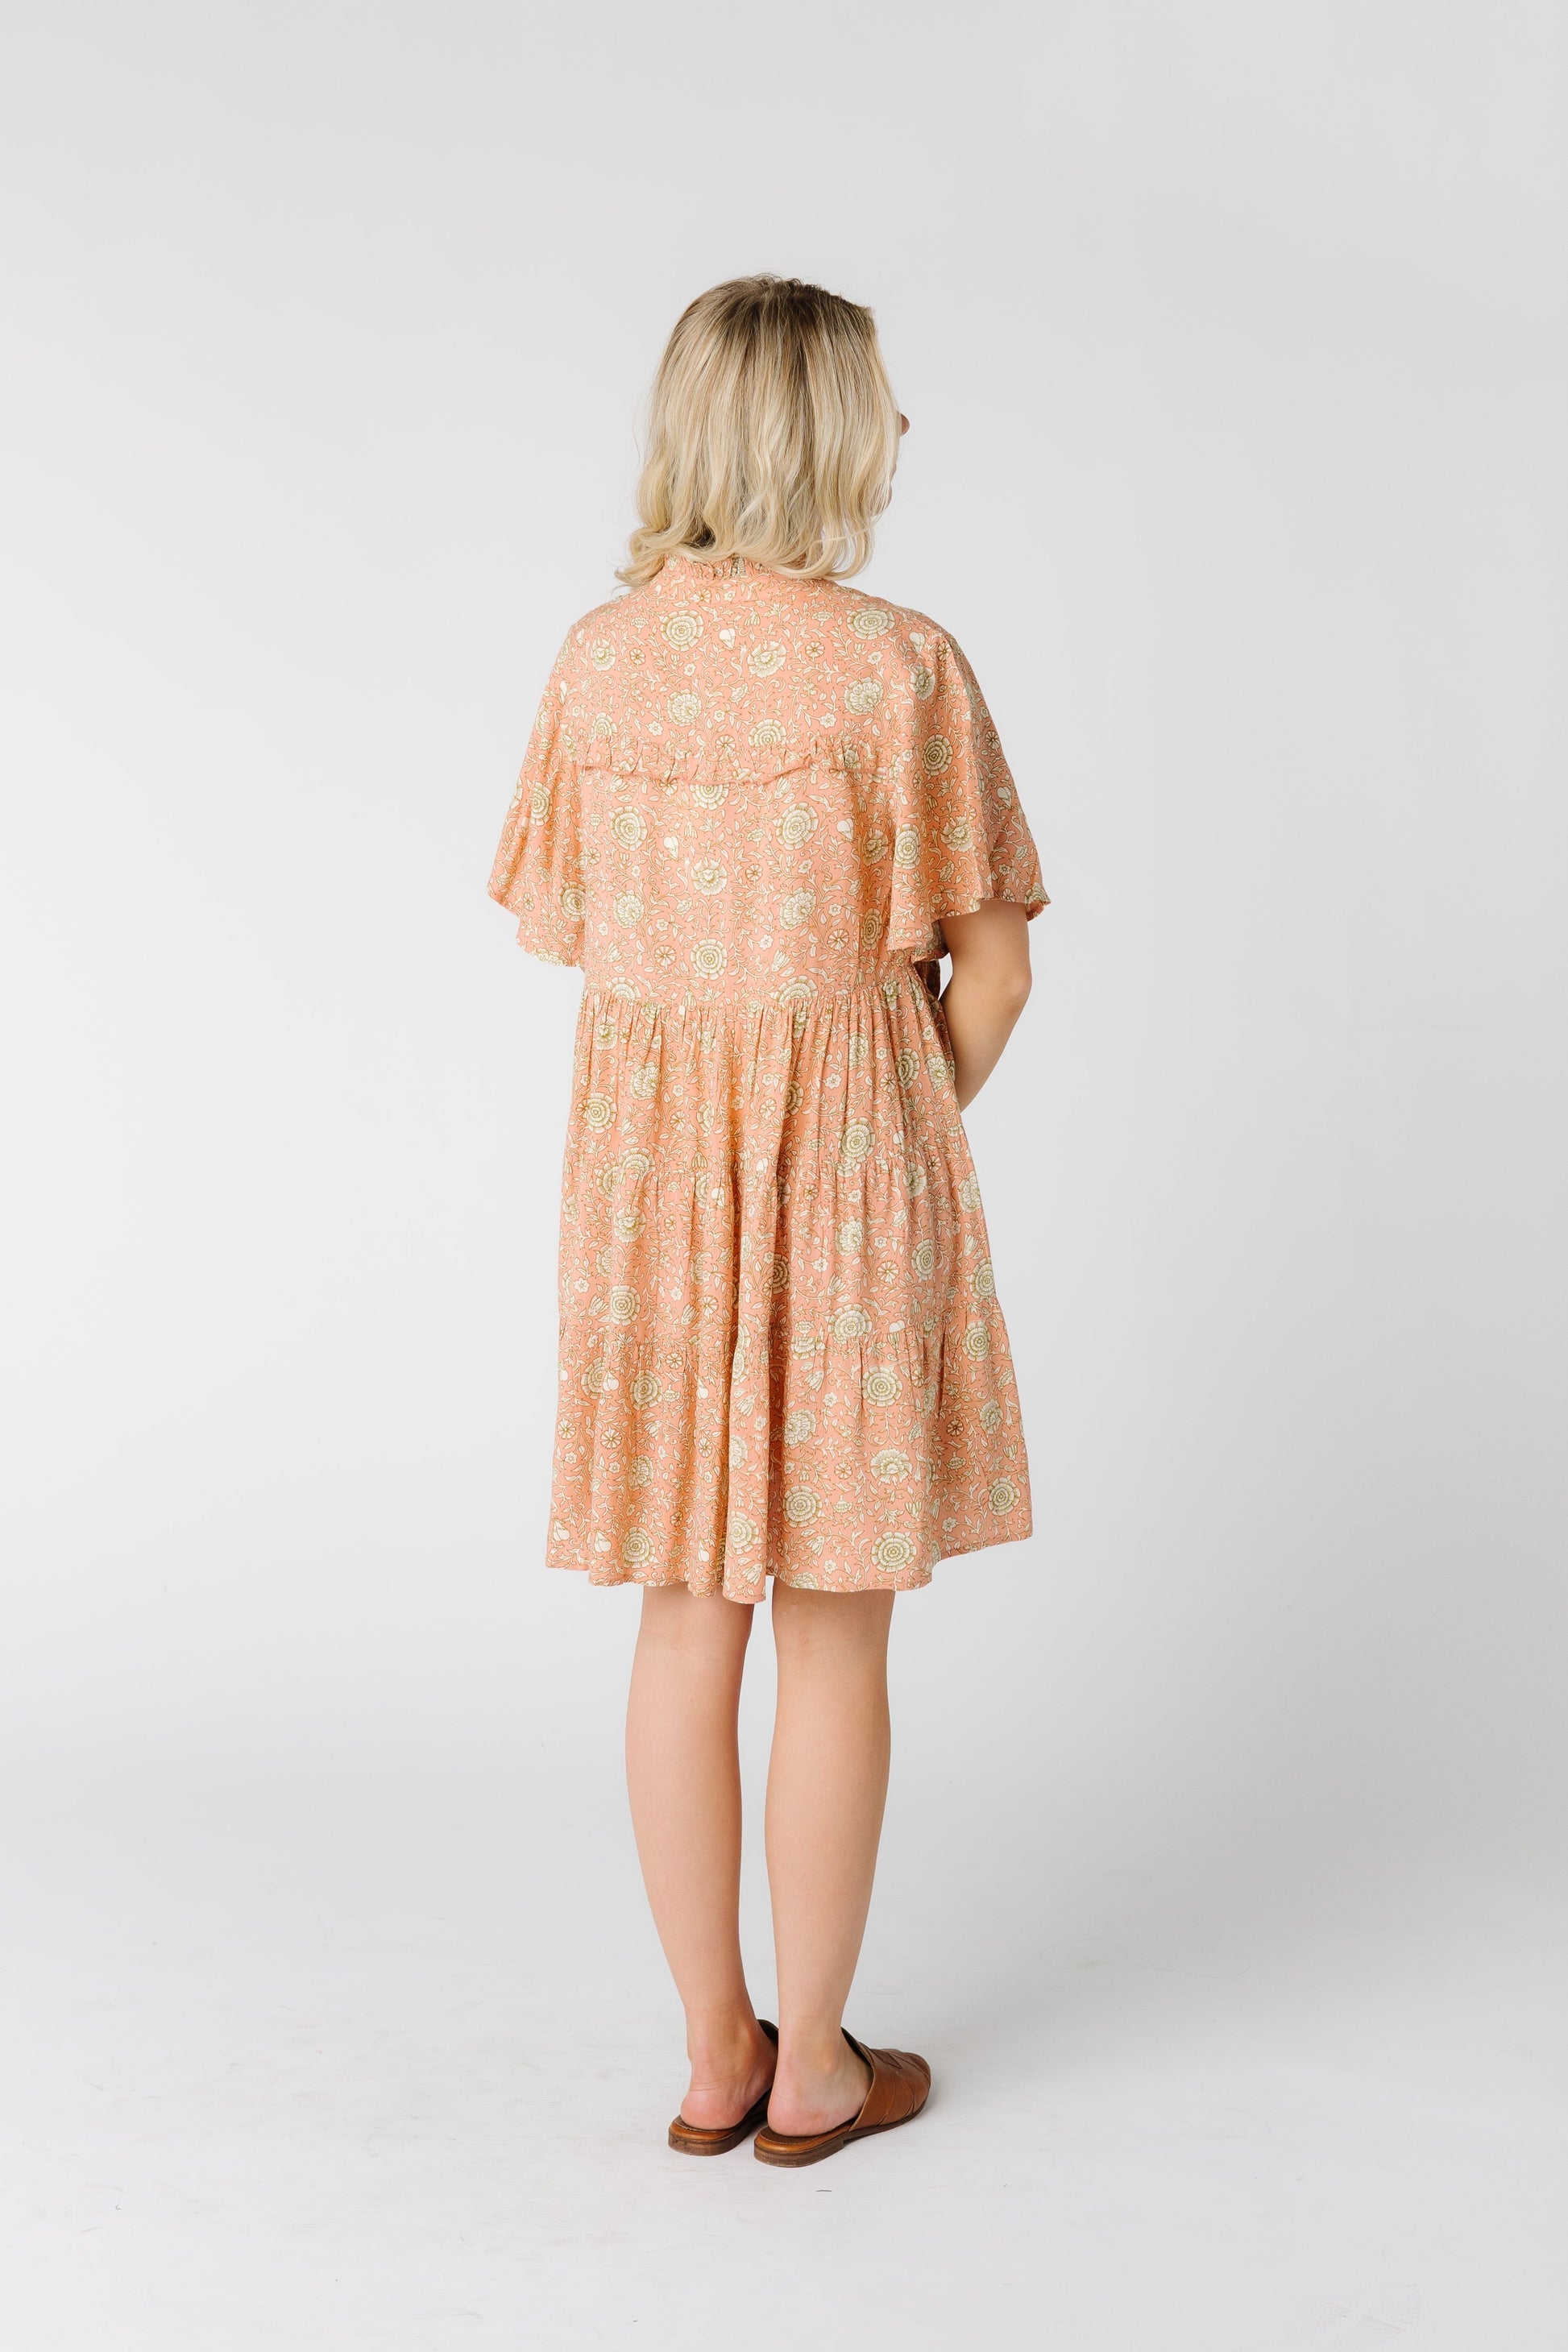 Citrus- Blakely Print Dress WOMEN'S DRESS Citrus 